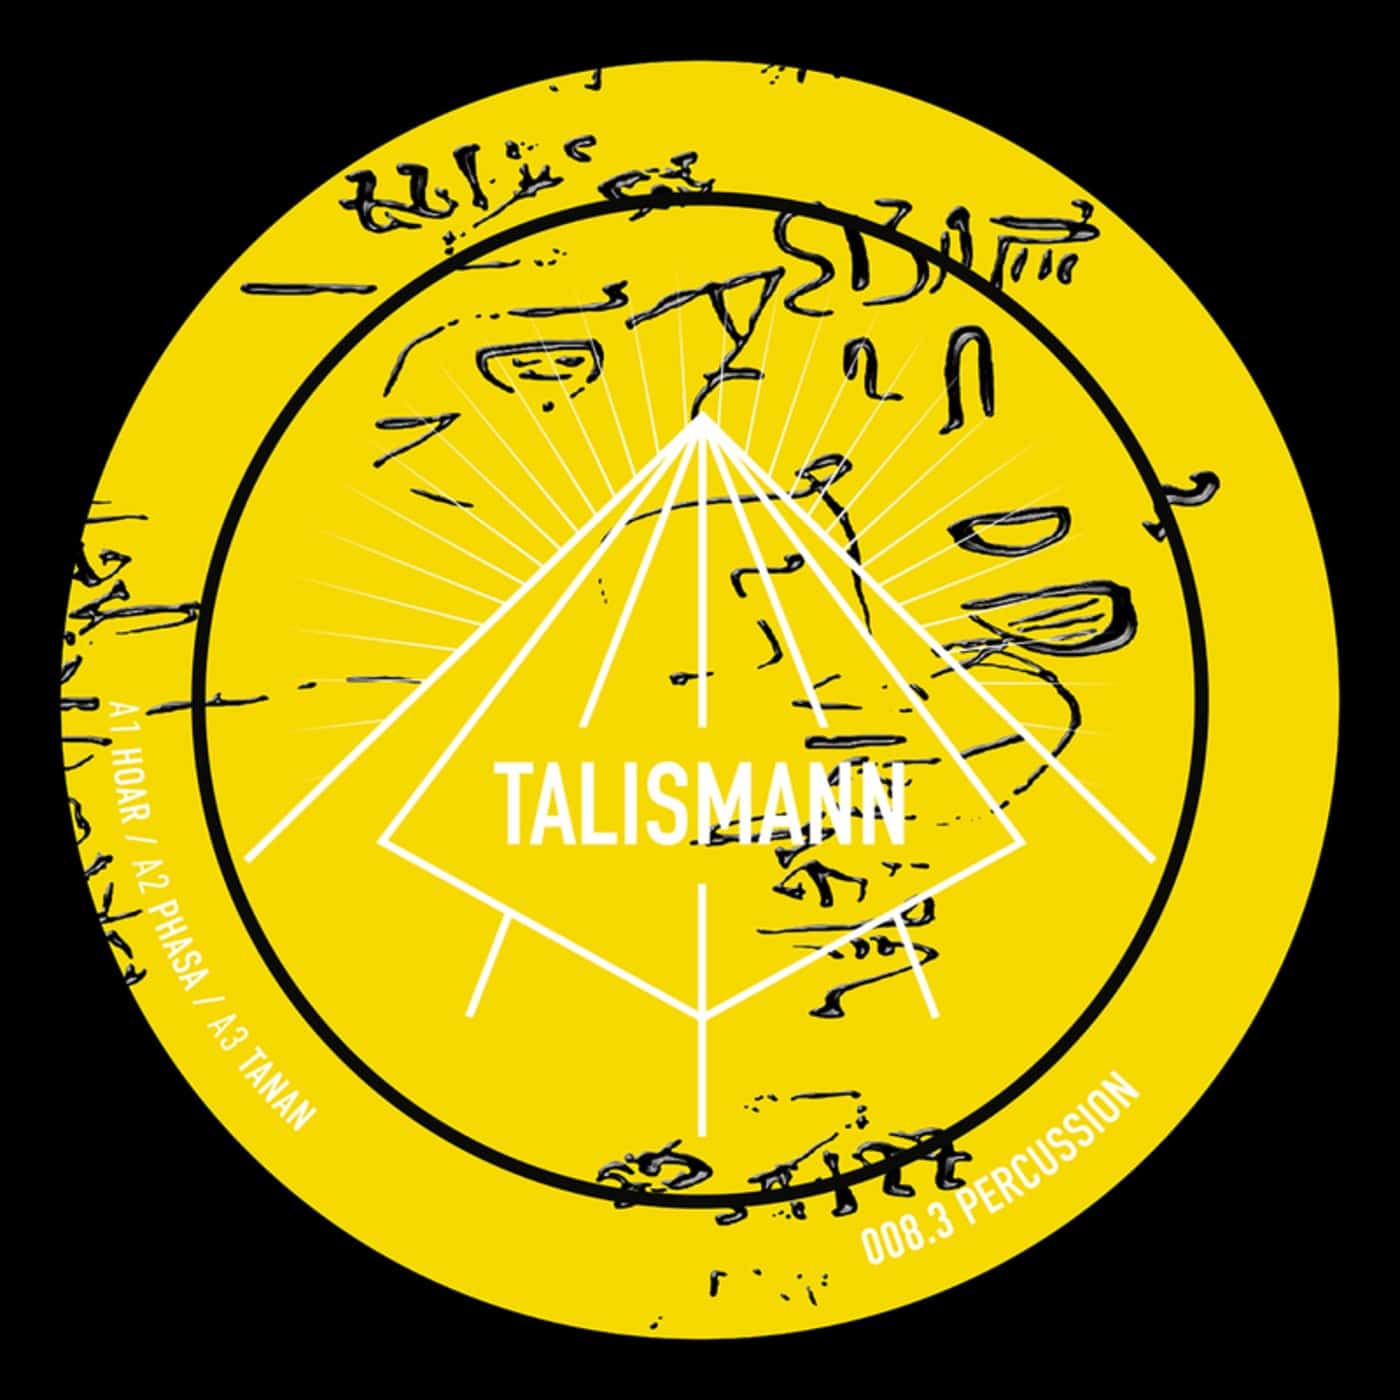 Download Talismann - Percussion Part 3 on Electrobuzz